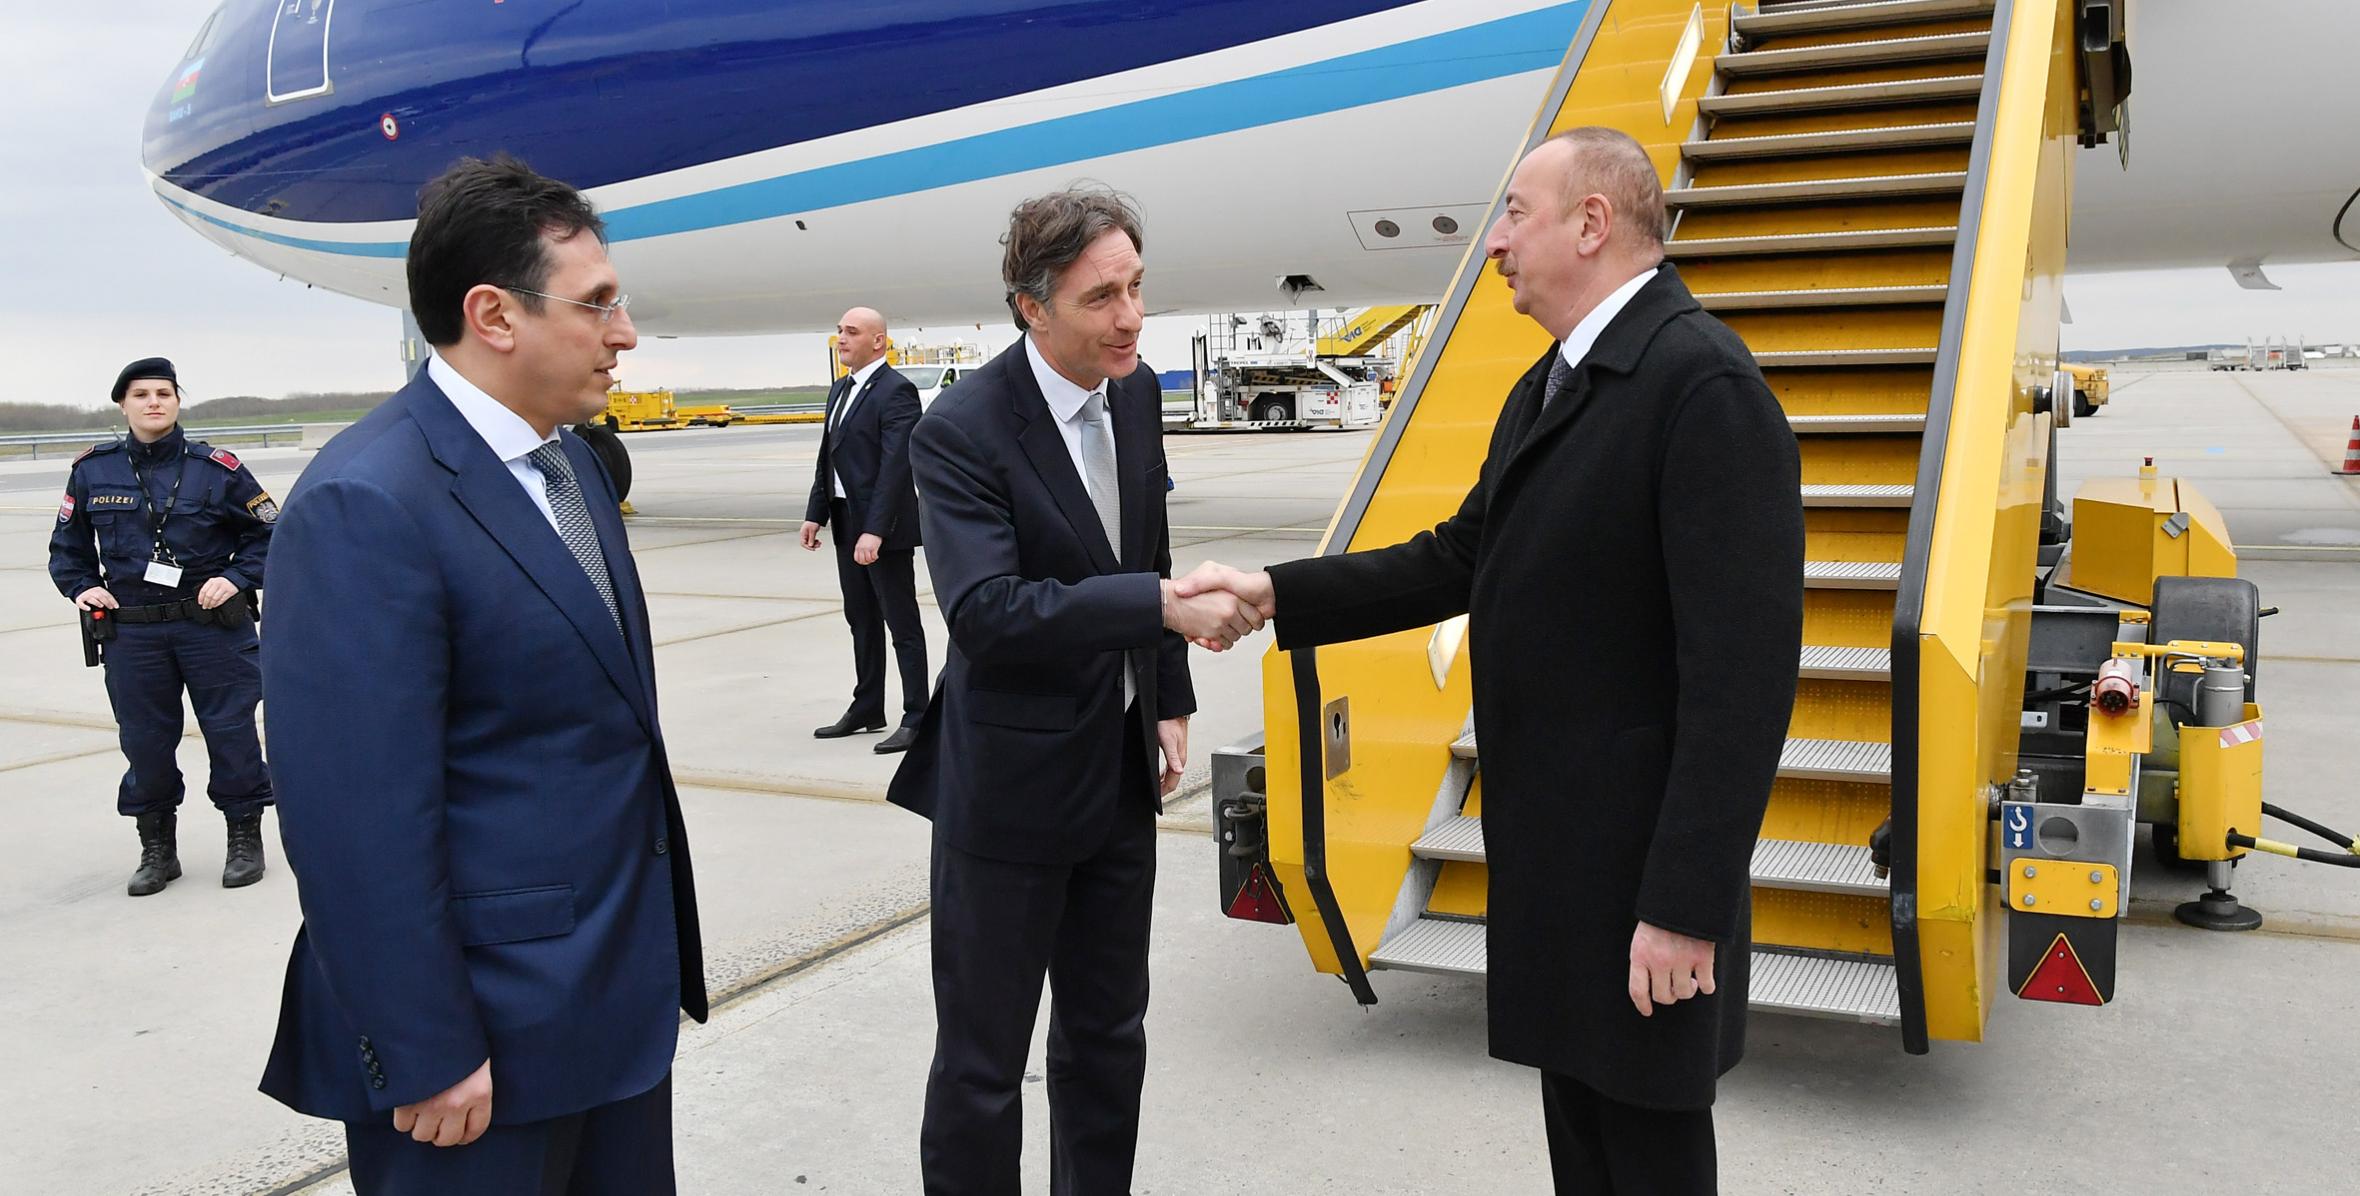 Ilham Aliyev arrived in Austria for working visit